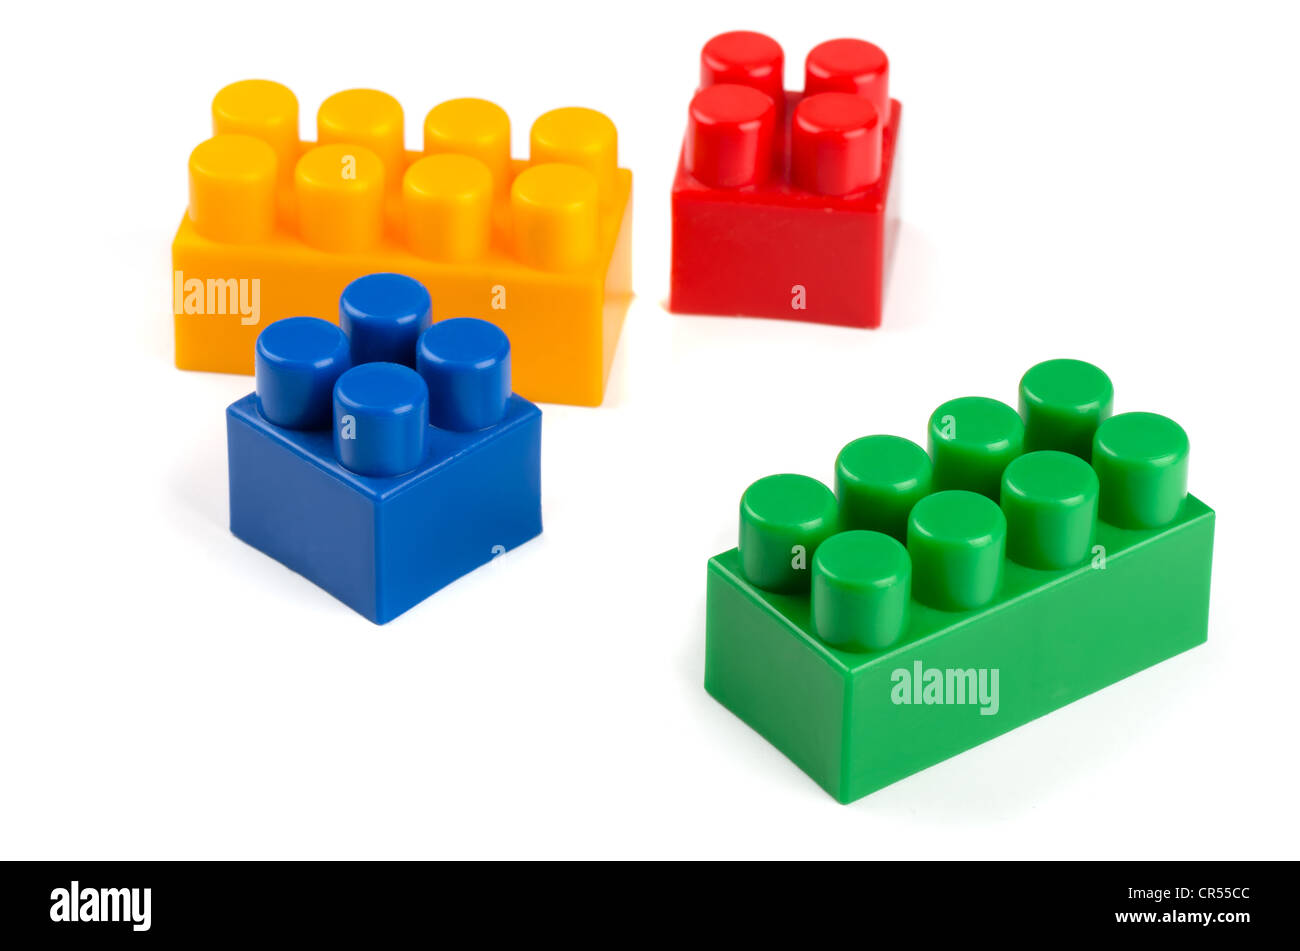 Toy plastic building blocks isolated on white Stock Photo